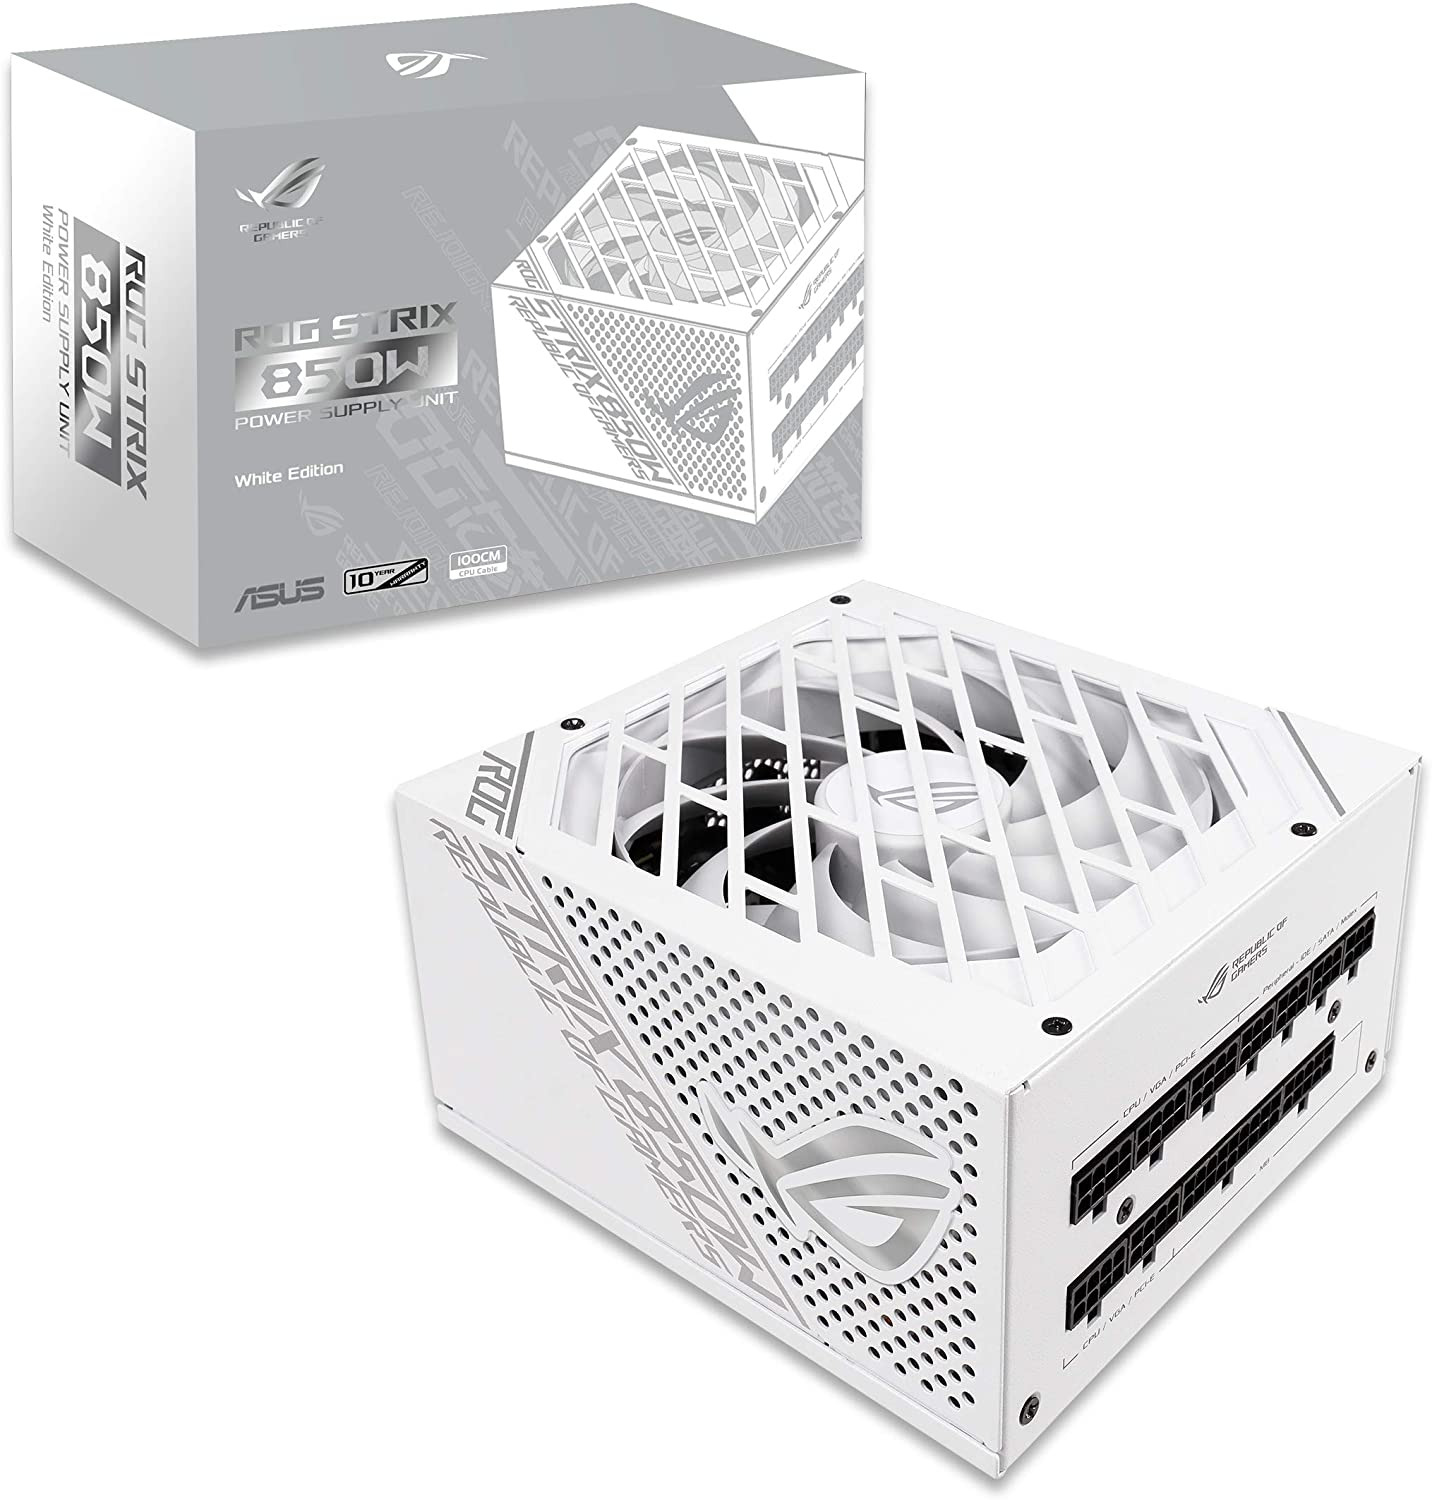 ASUS ROG Strix 850W White Edition PSU, Power Supply (ROG Heatsinks, Axial-Tech